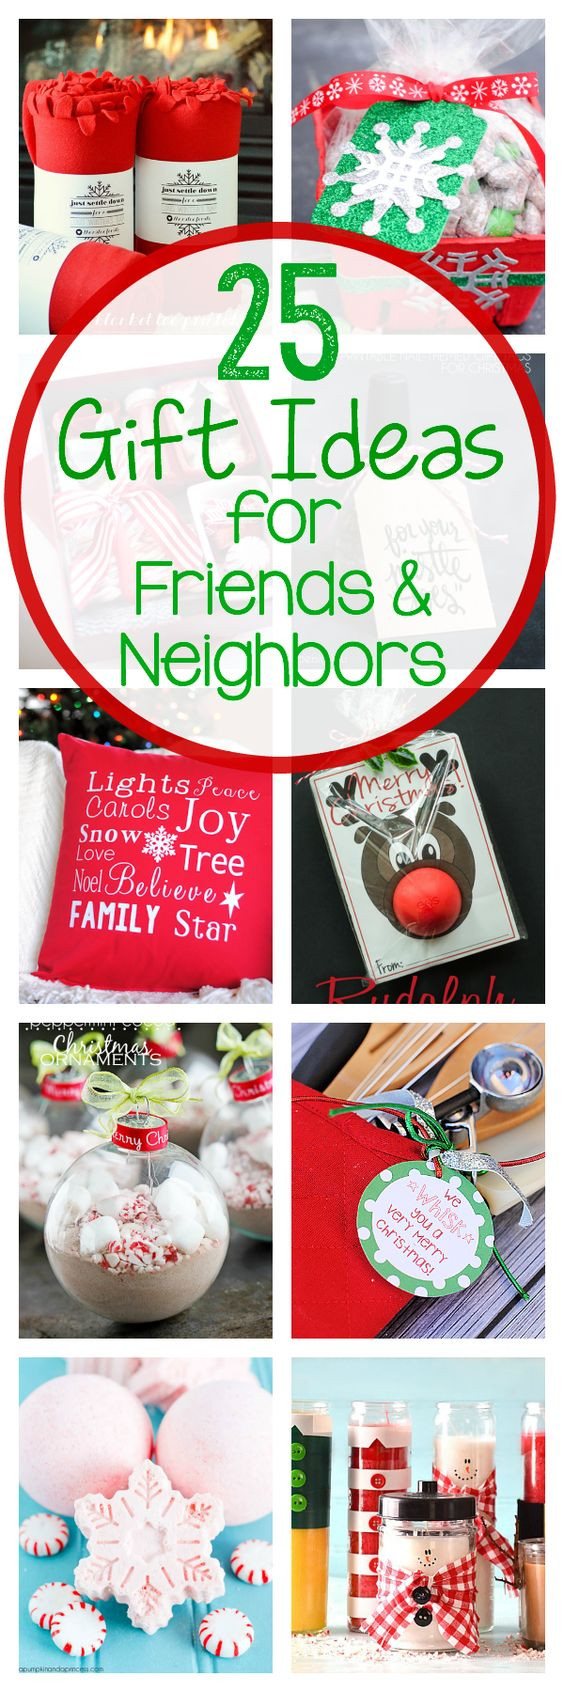 Friend Christmas Gift Ideas
 25 Gift Ideas for Friends & Neighbors